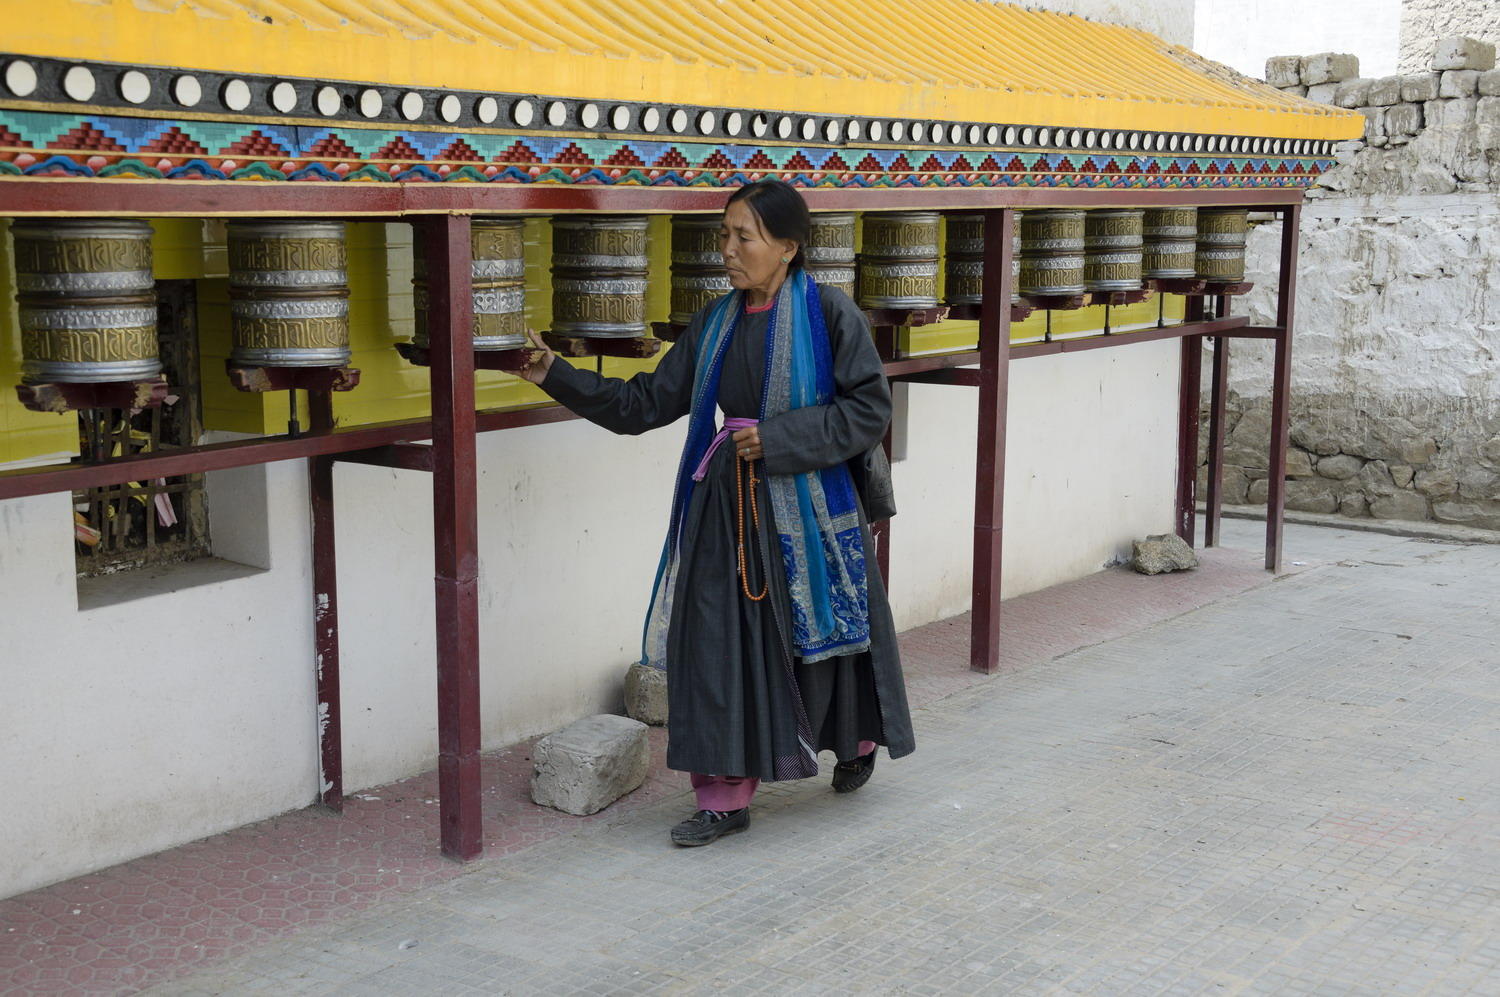 DSC_5328_1A2 - Spinning Prayer Wheels (Shey Monastery - Leh)